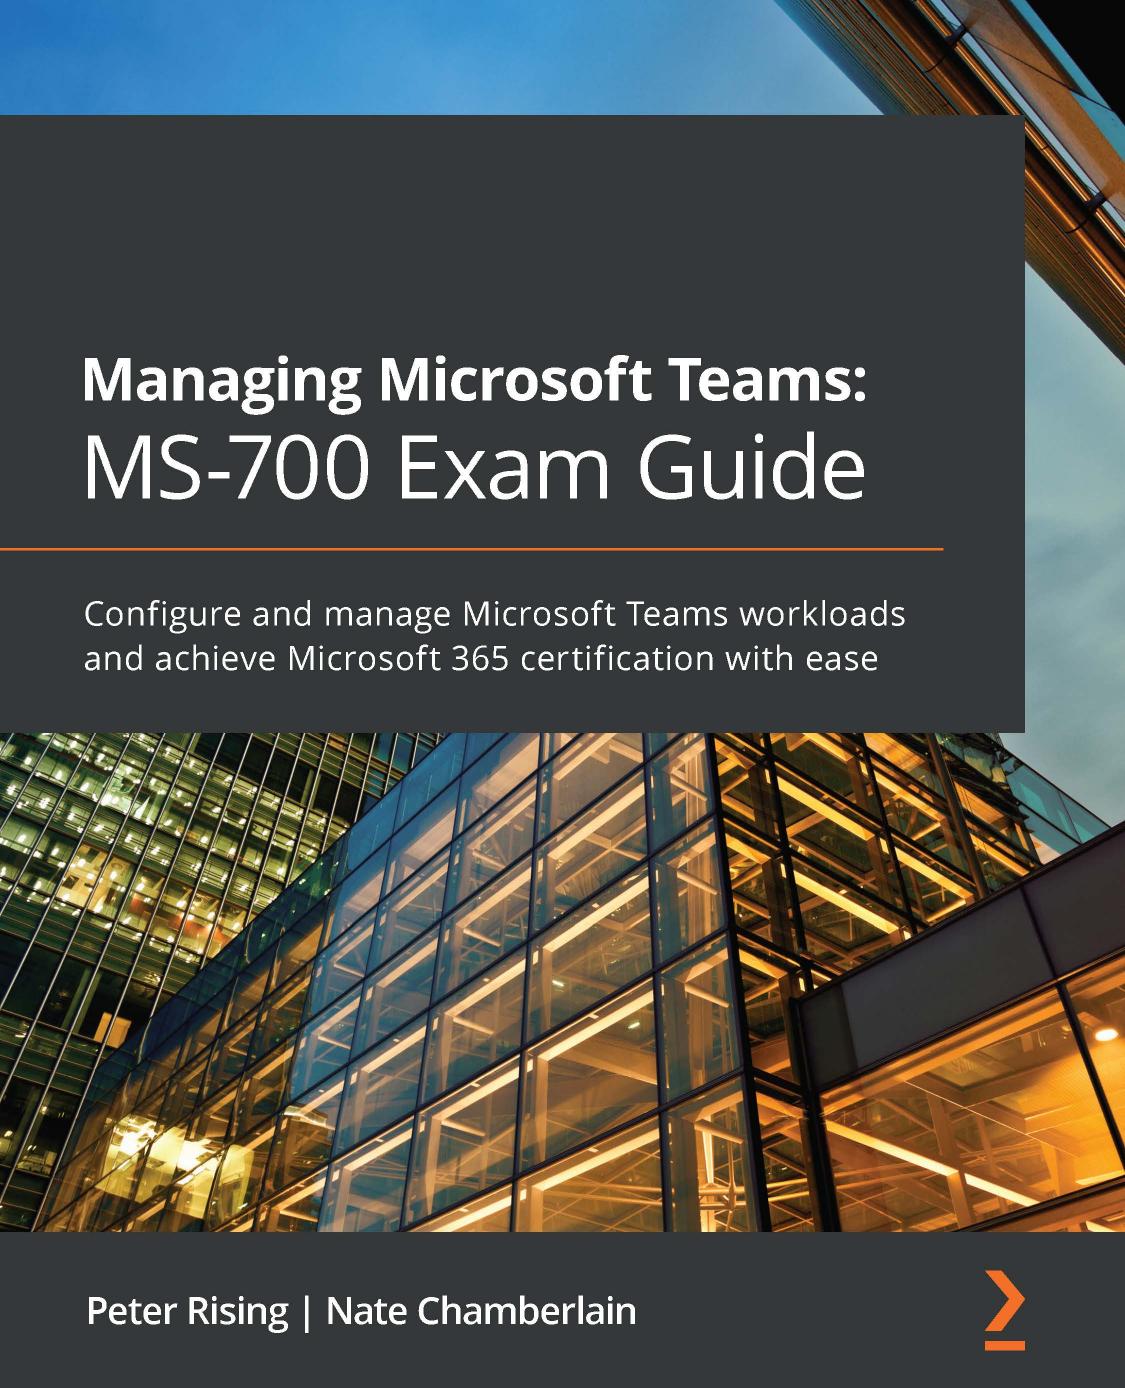 Managing Microsoft Teams: MS-700 Exam Guide by Peter Rising Nate Chamberlain